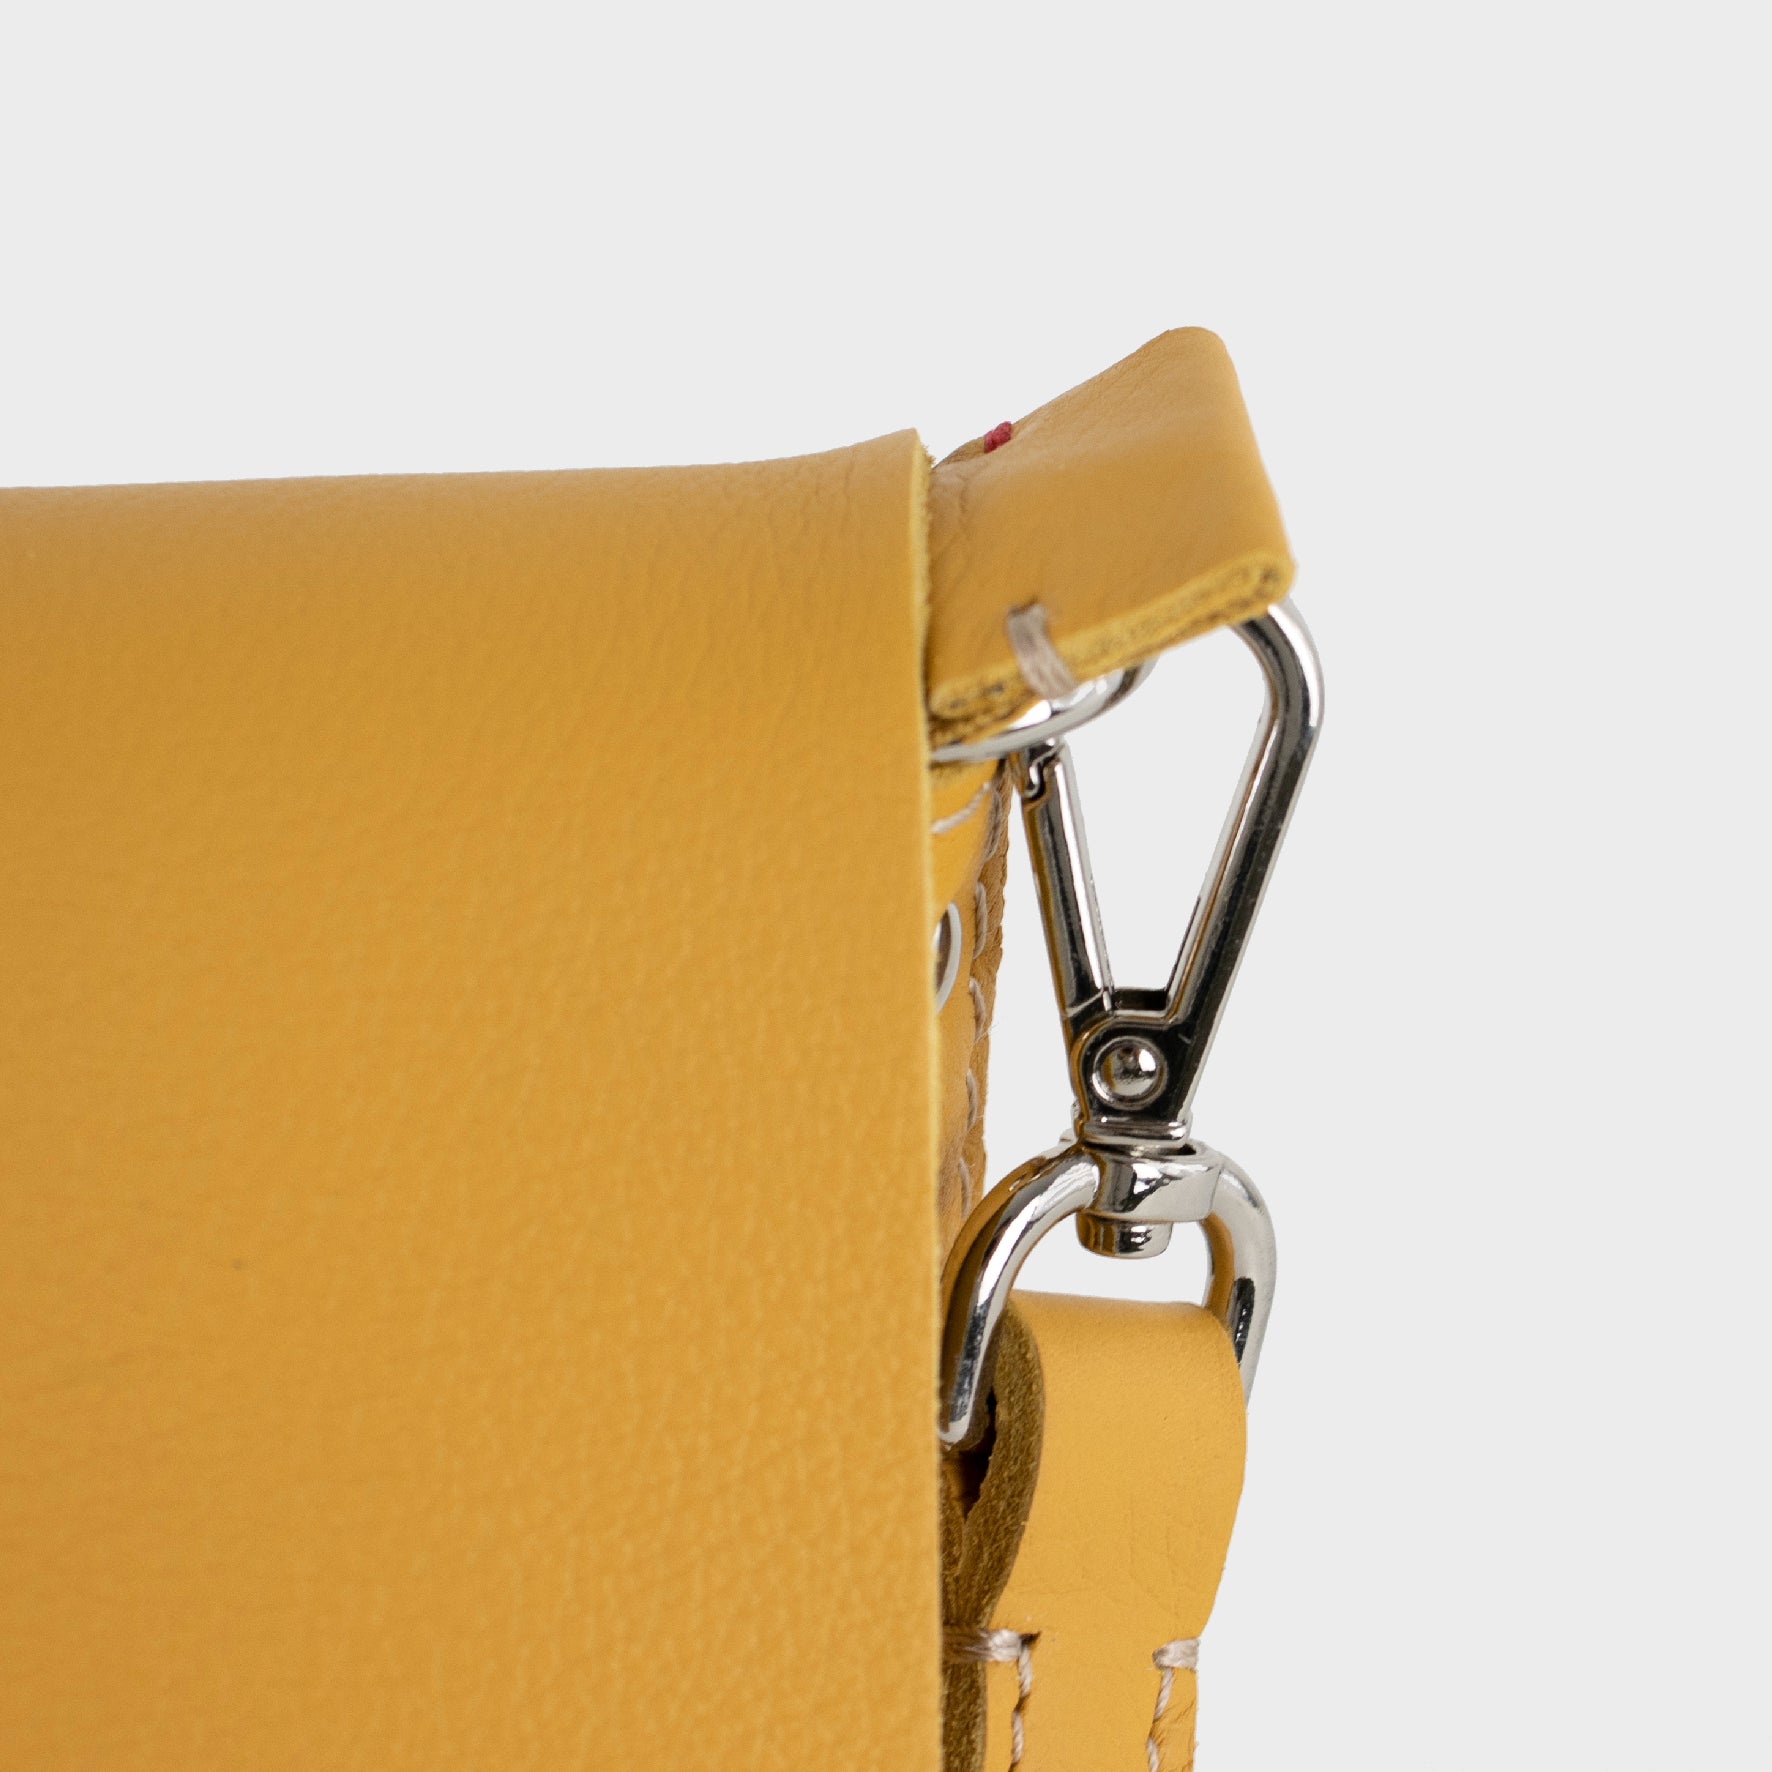 Joy Syna S - Leather Crossbody Bag - Golden